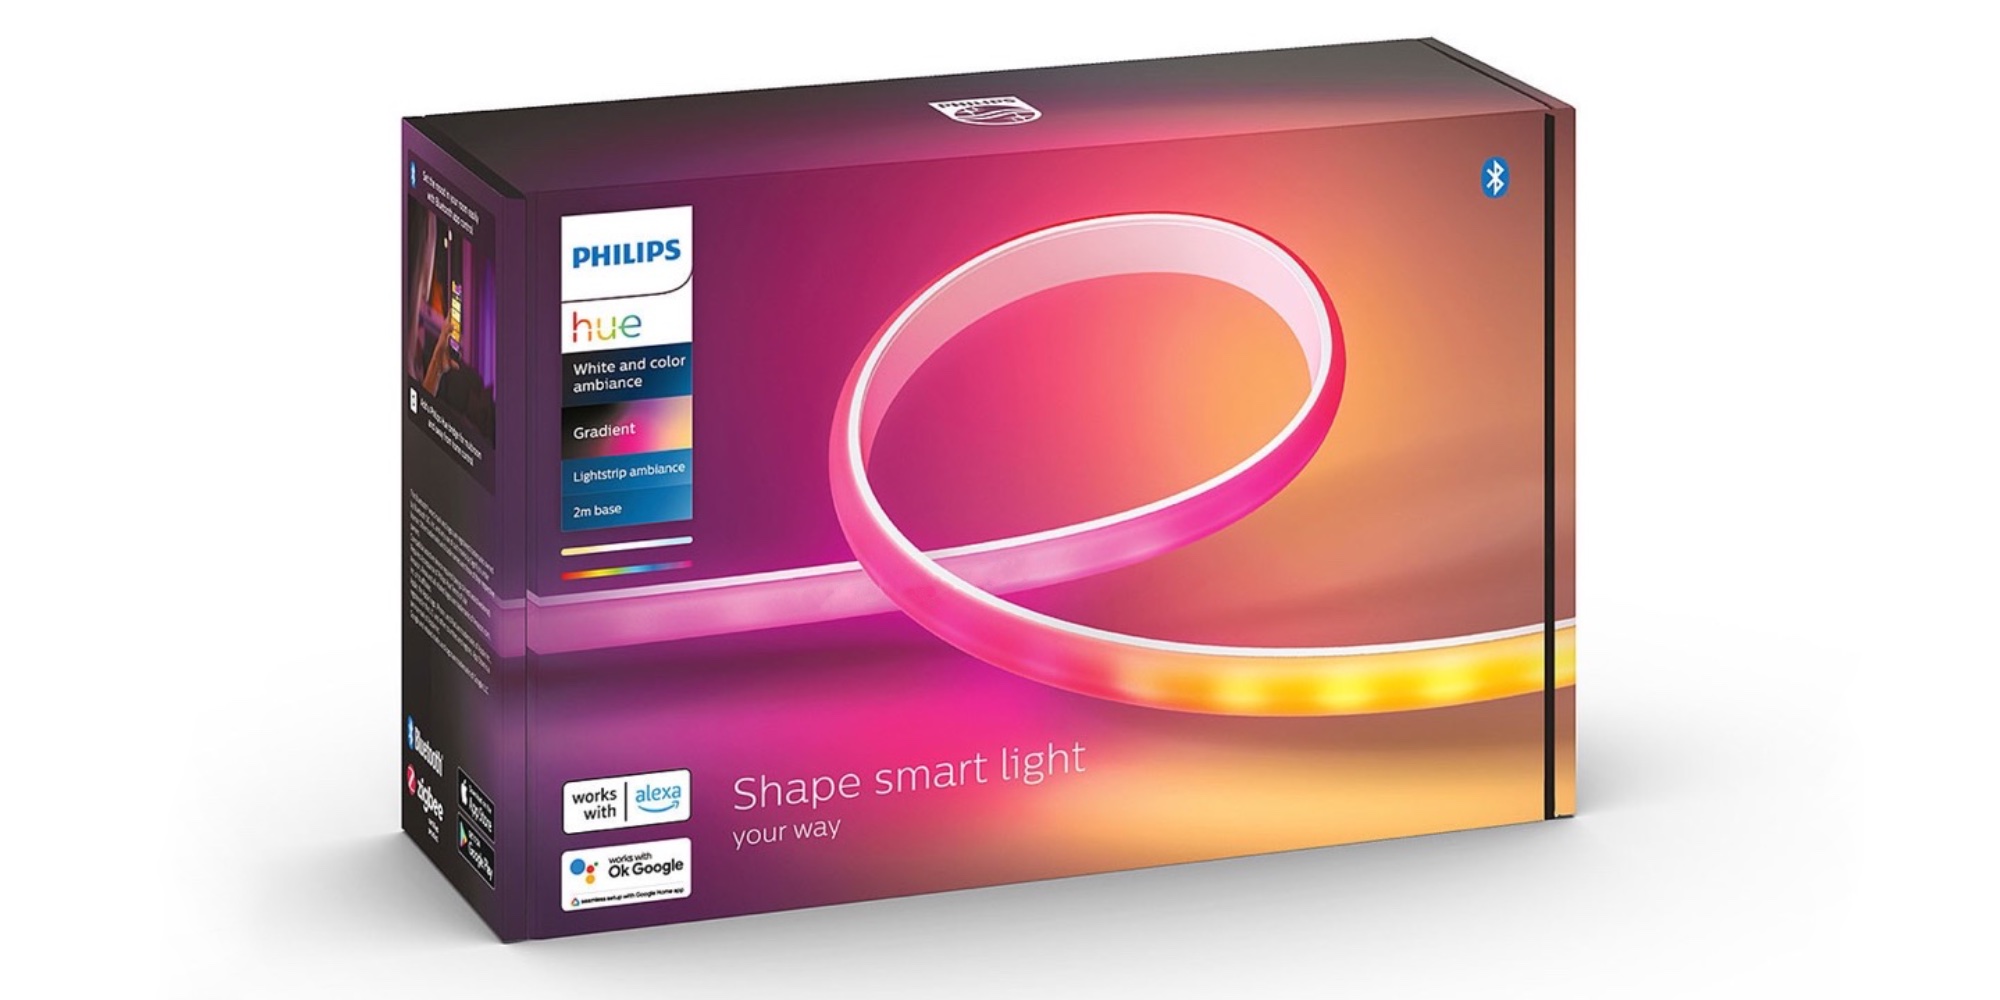 This Philips Hue TV smart lights alternative is on sale